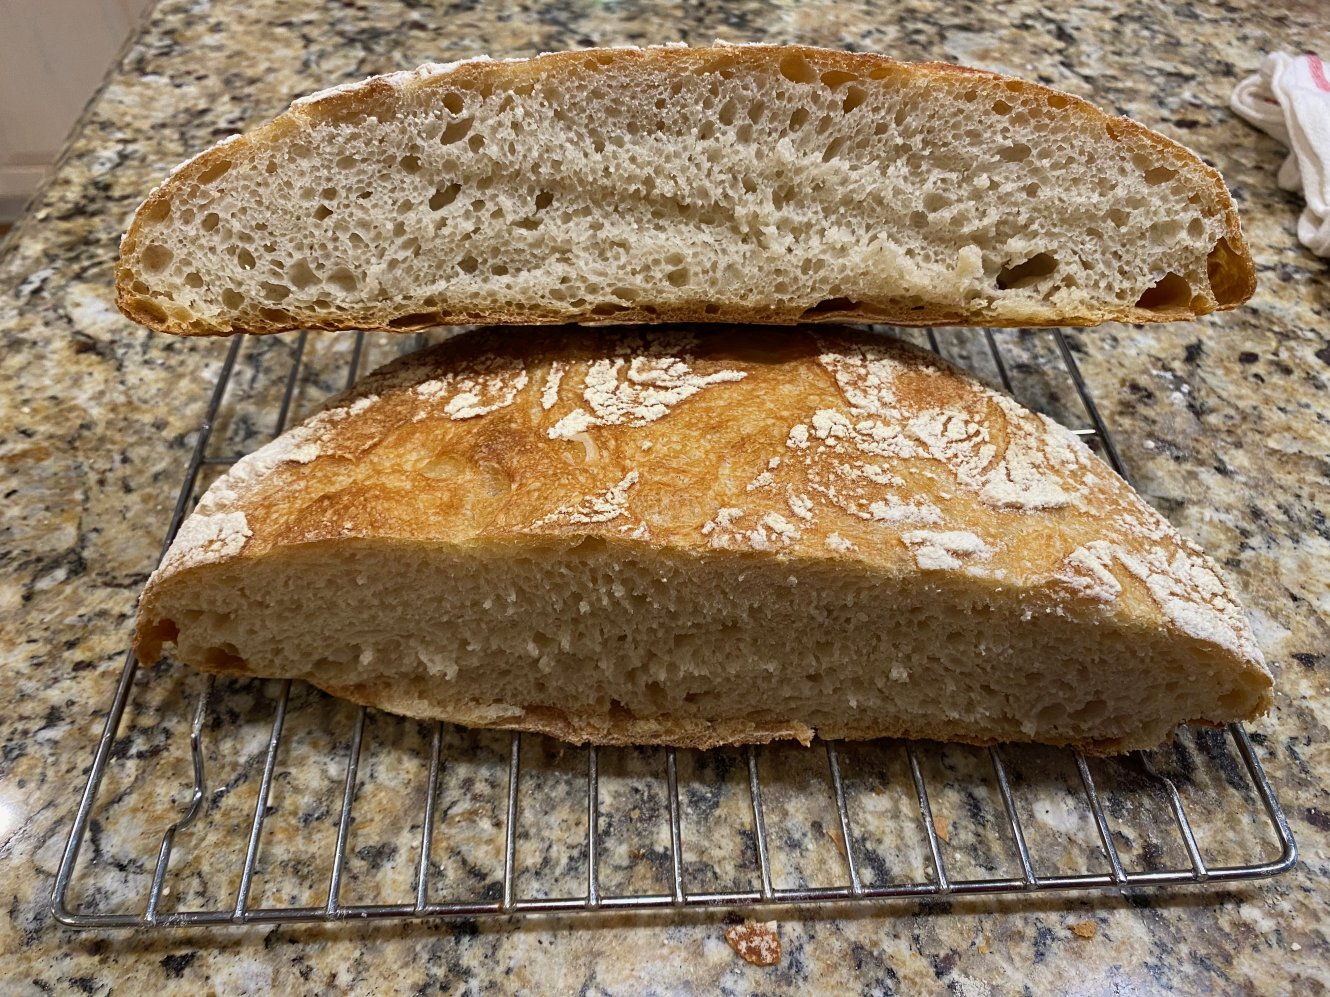 Finished bread interior (crumb)